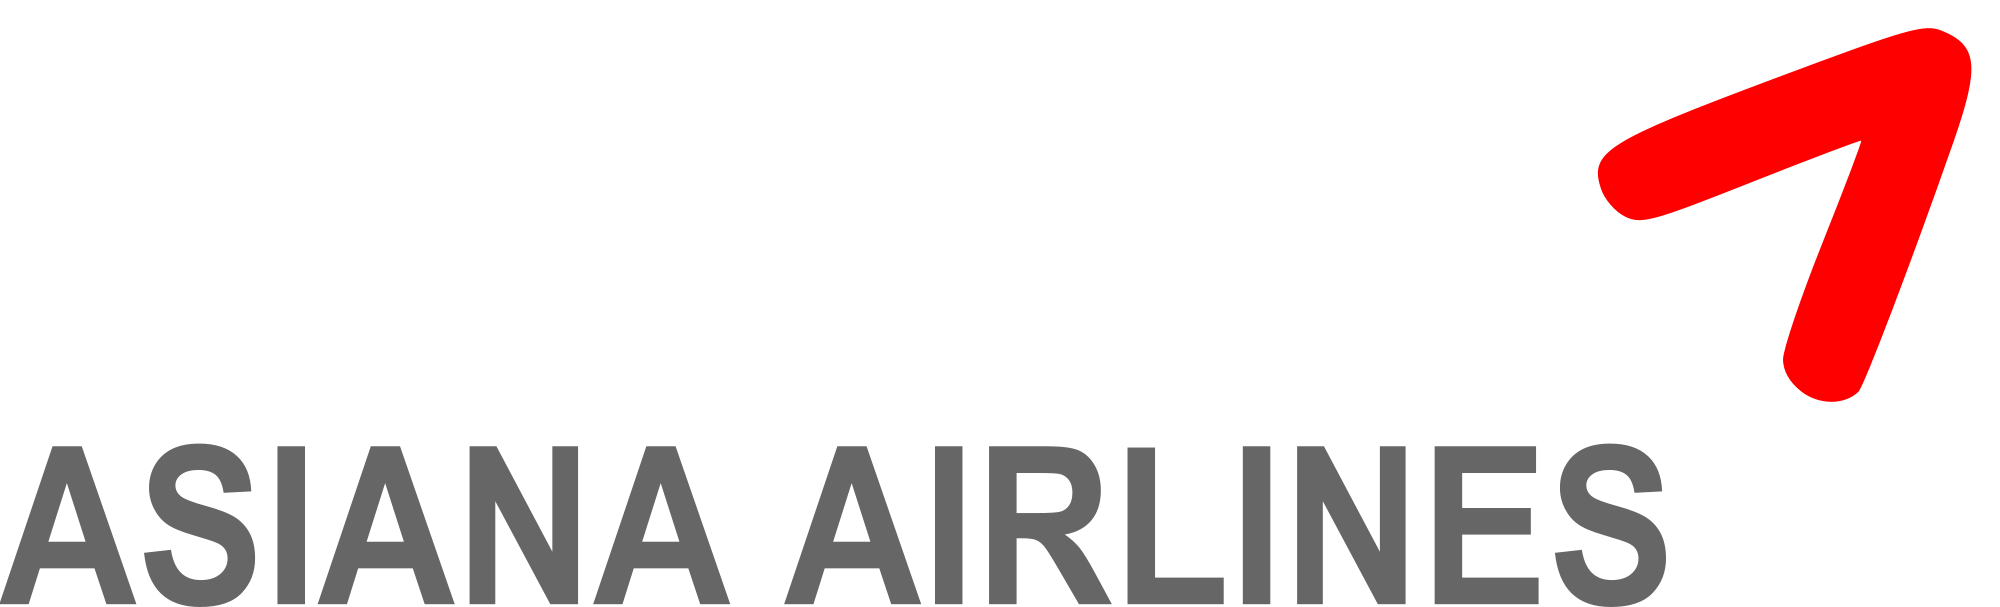 Asian Airline Logo - Asiana Logos